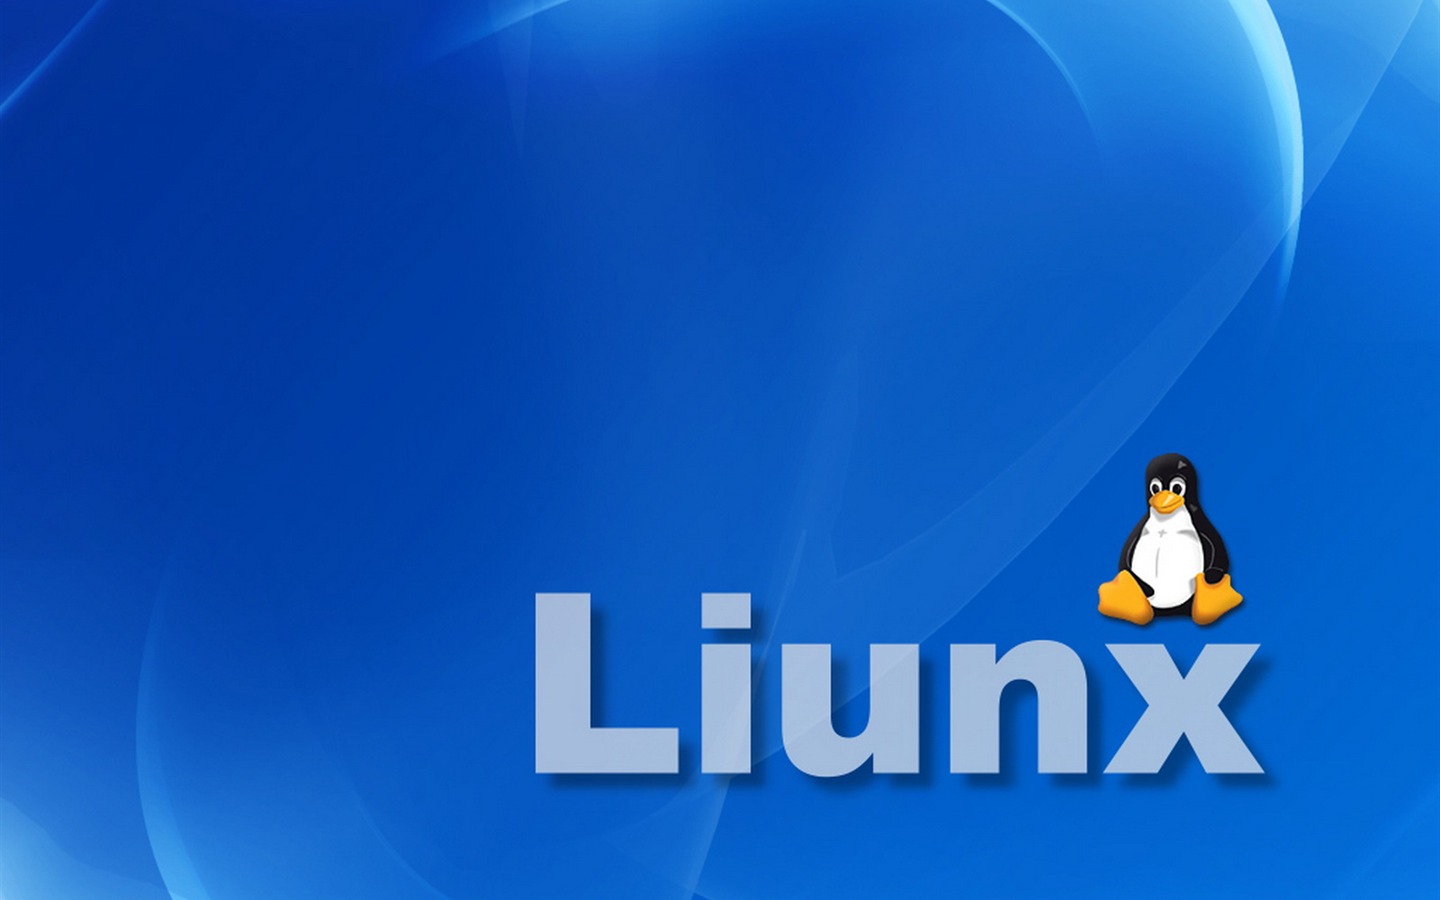 Linux 主題壁紙(一) #14 - 1440x900